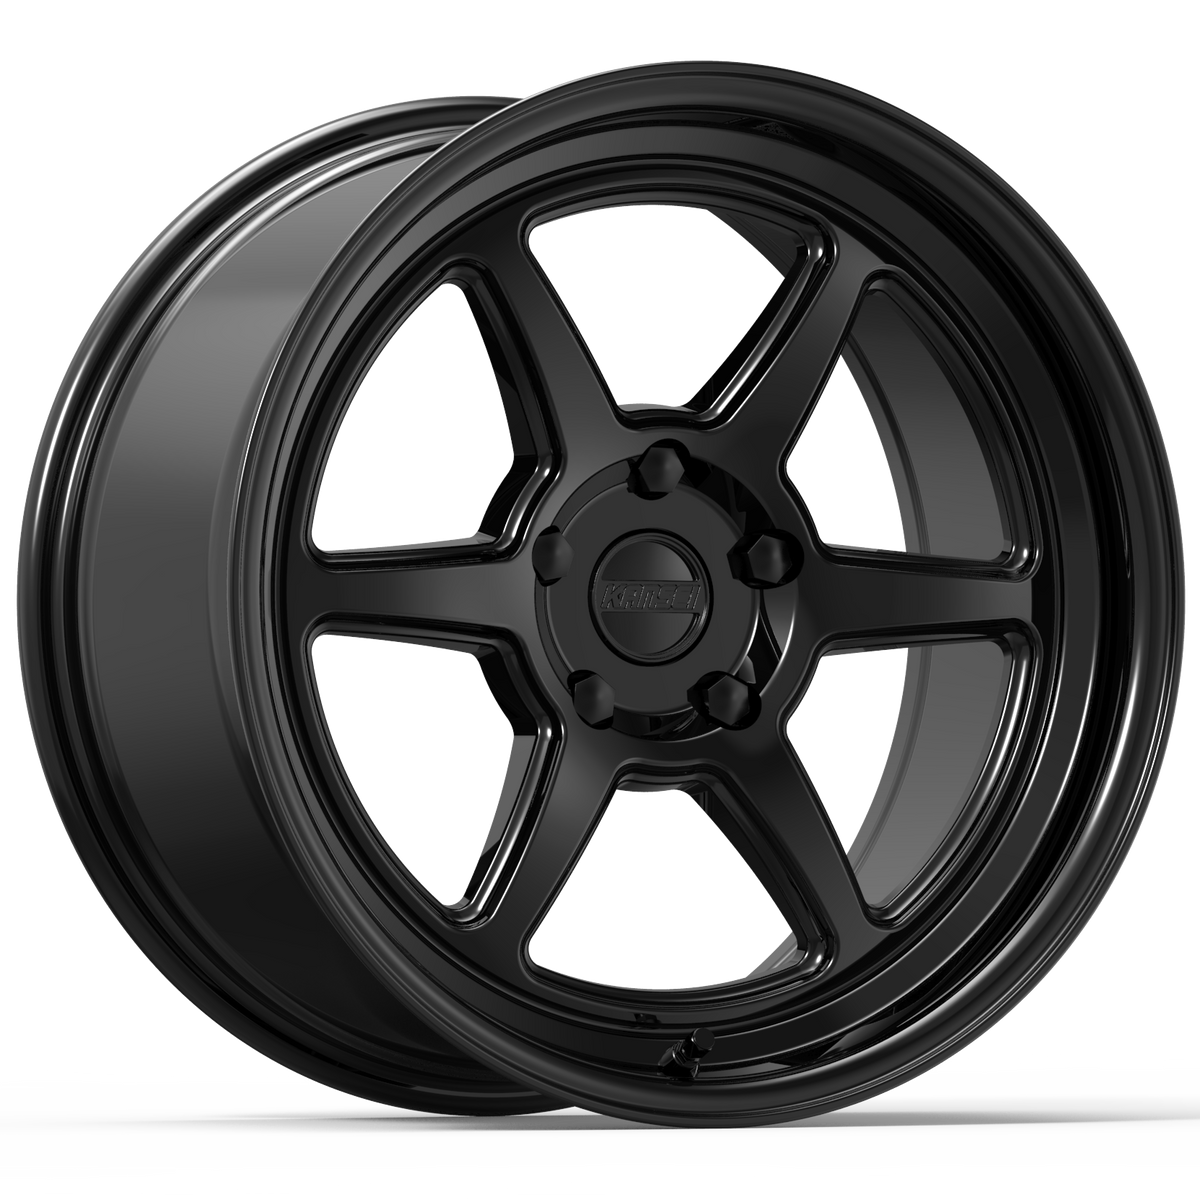 K14B ROKU Wheel, Size: 18" x 9.50", Bolt Pattern: 5 x 108 mm, Backspace: 6.75" [Finish: Gloss Black]